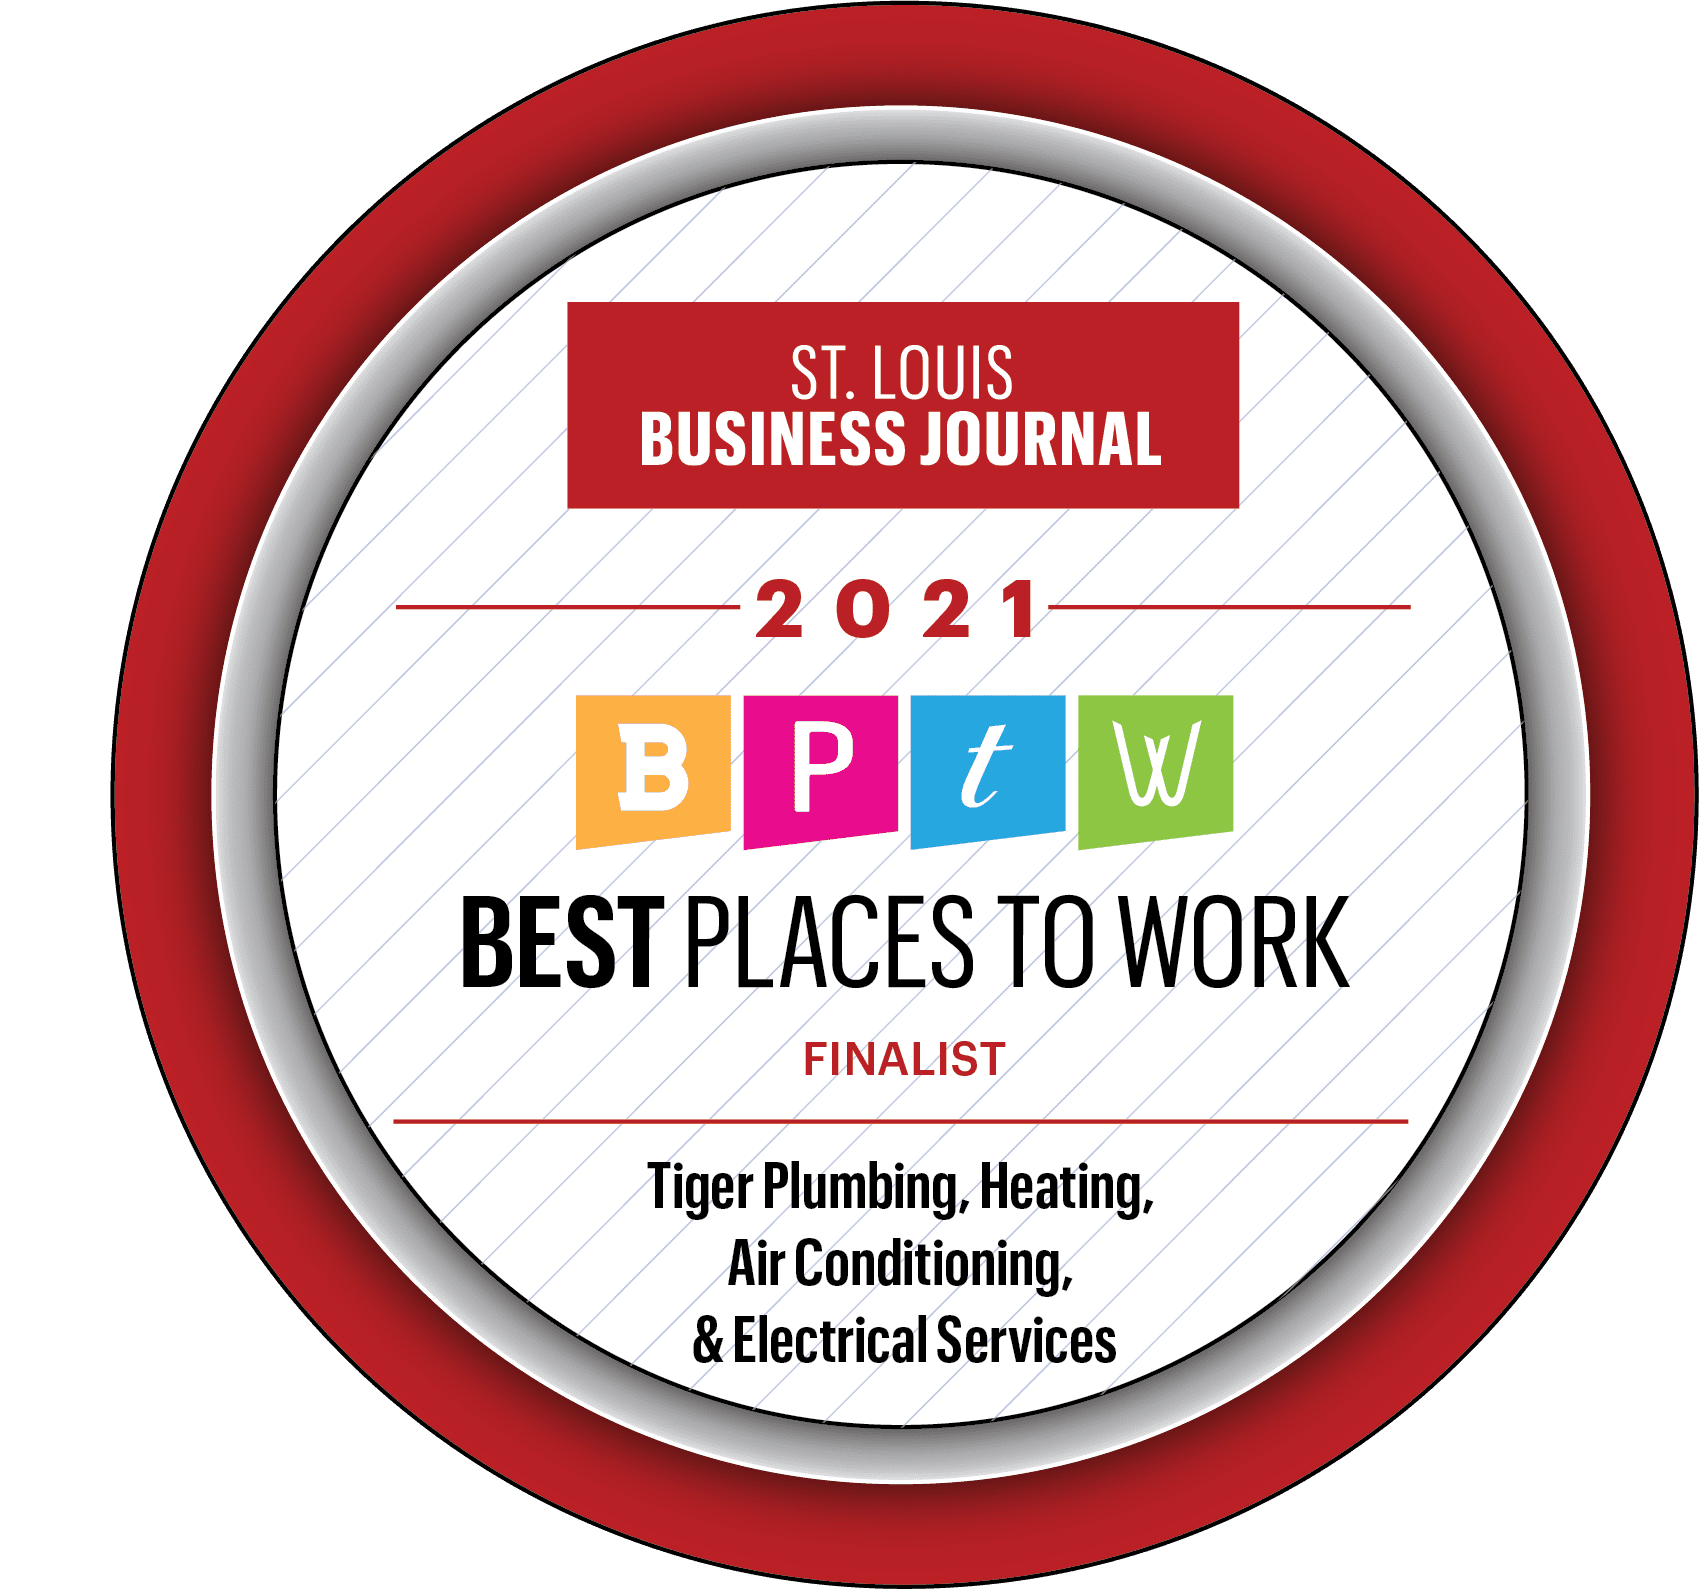 Saint Louis Business Journal Best Places to Work 2021 Finalist